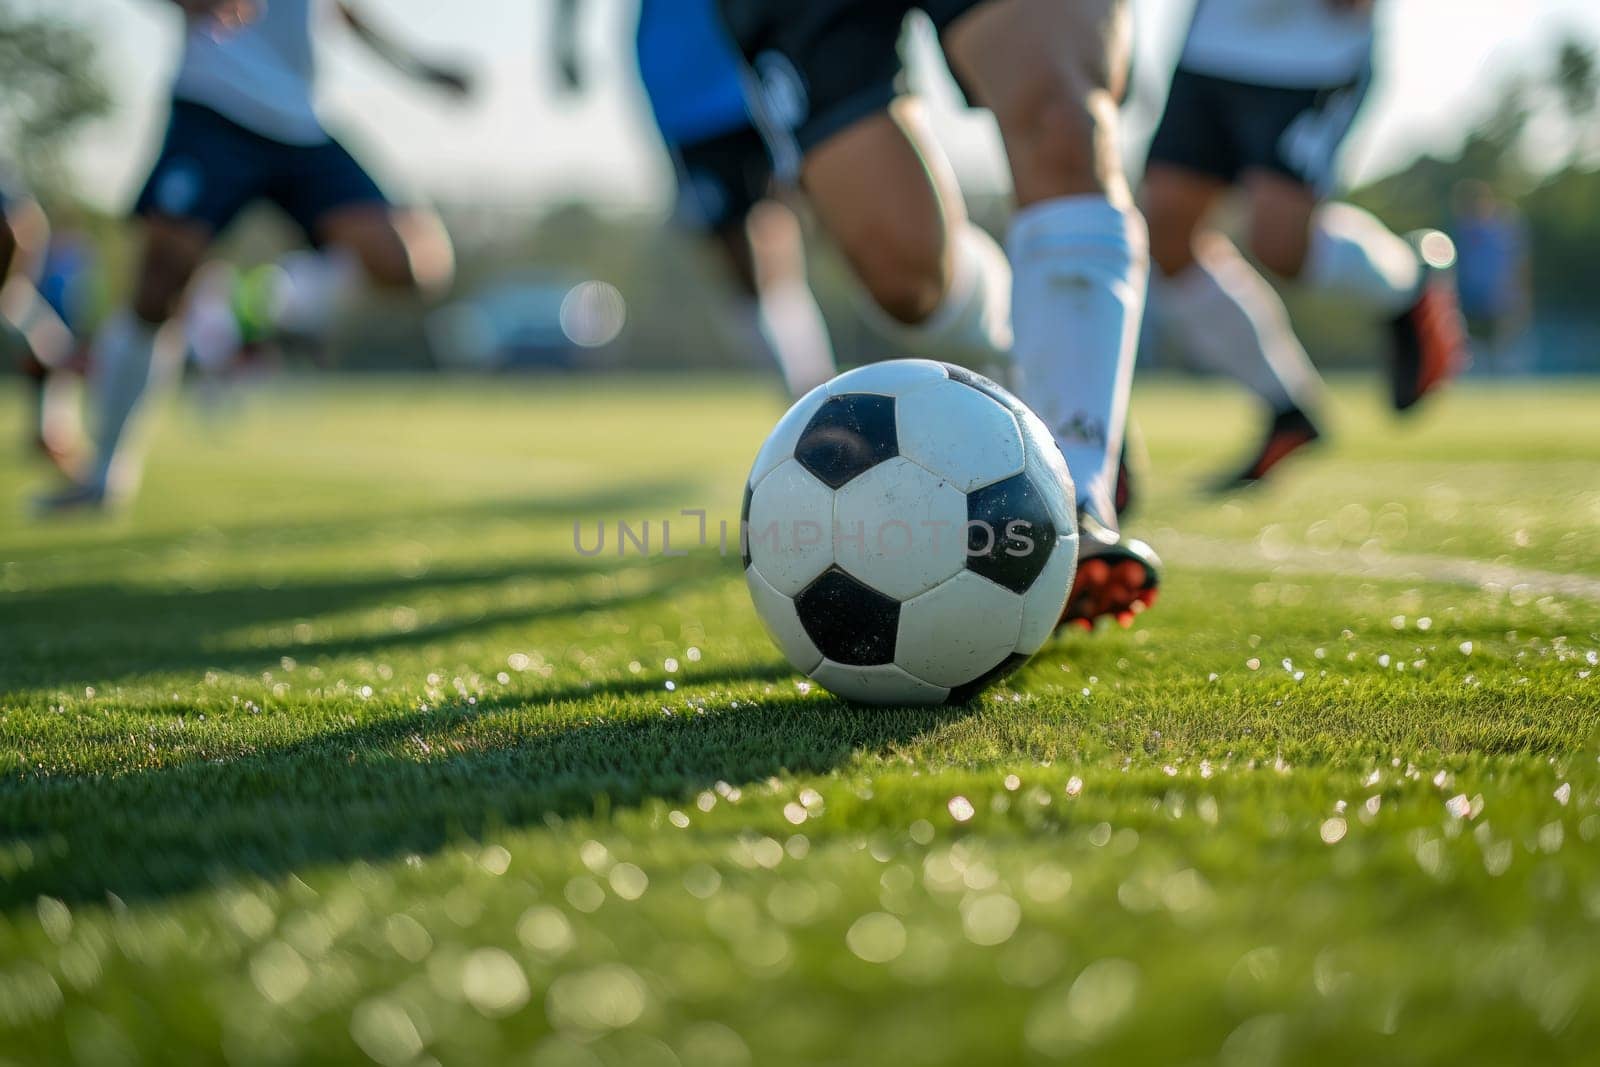 A soccer player kicks a ball on a football stadium field during game